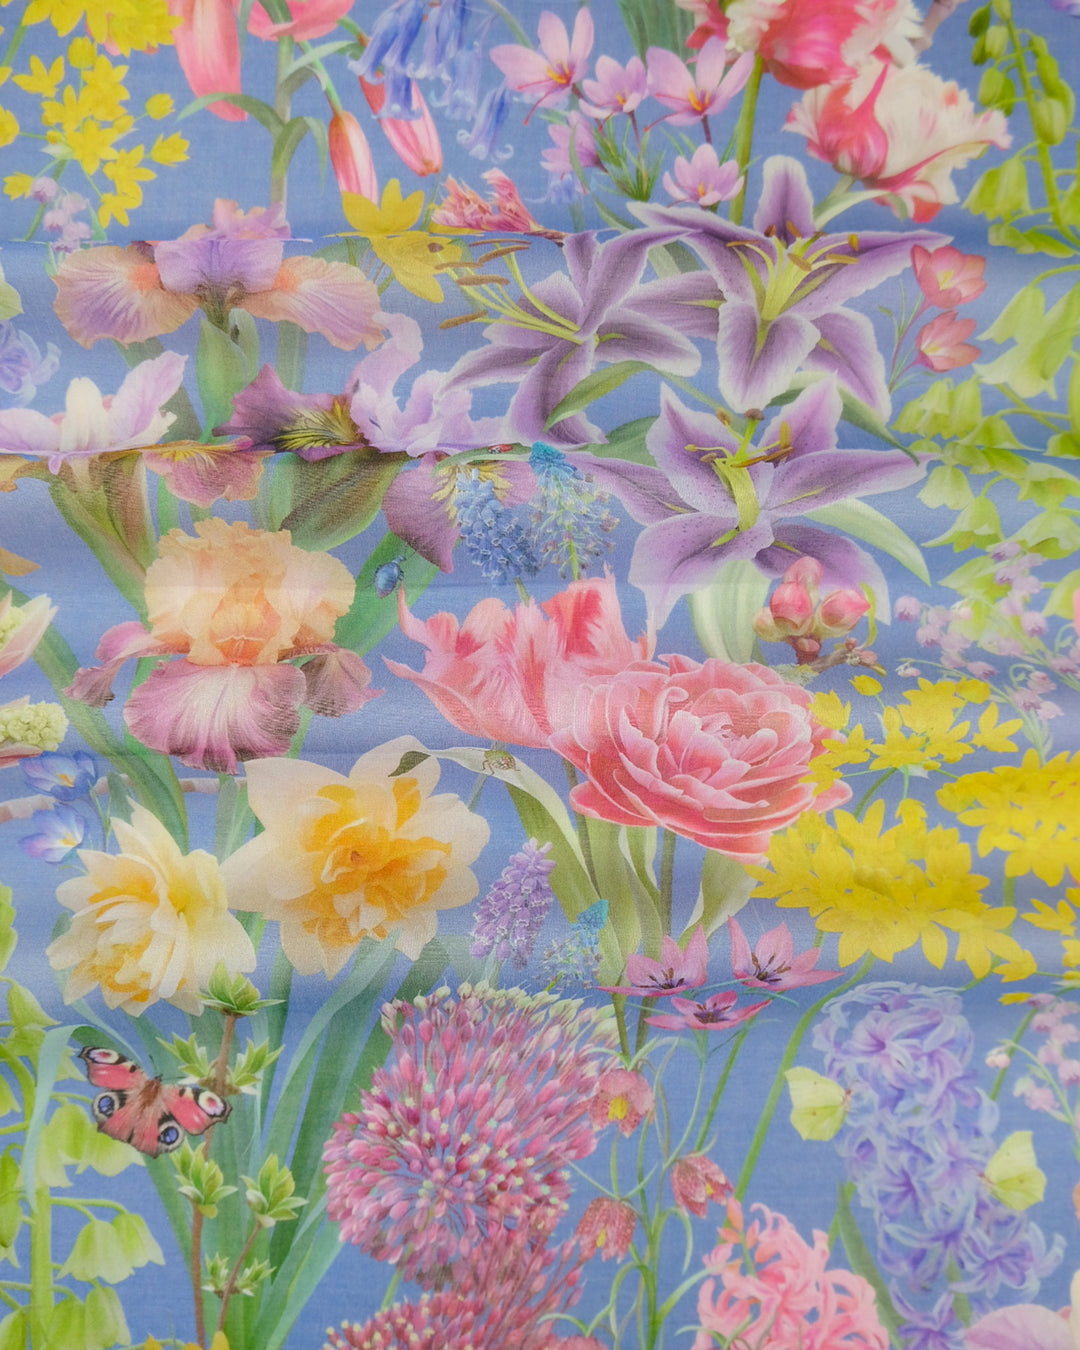 bauldry-botanicals-floral-sheer-voile-fabric-for-voiles-soft-light-fabric-flower-print-design-inspired-by-british-garden-british-designer